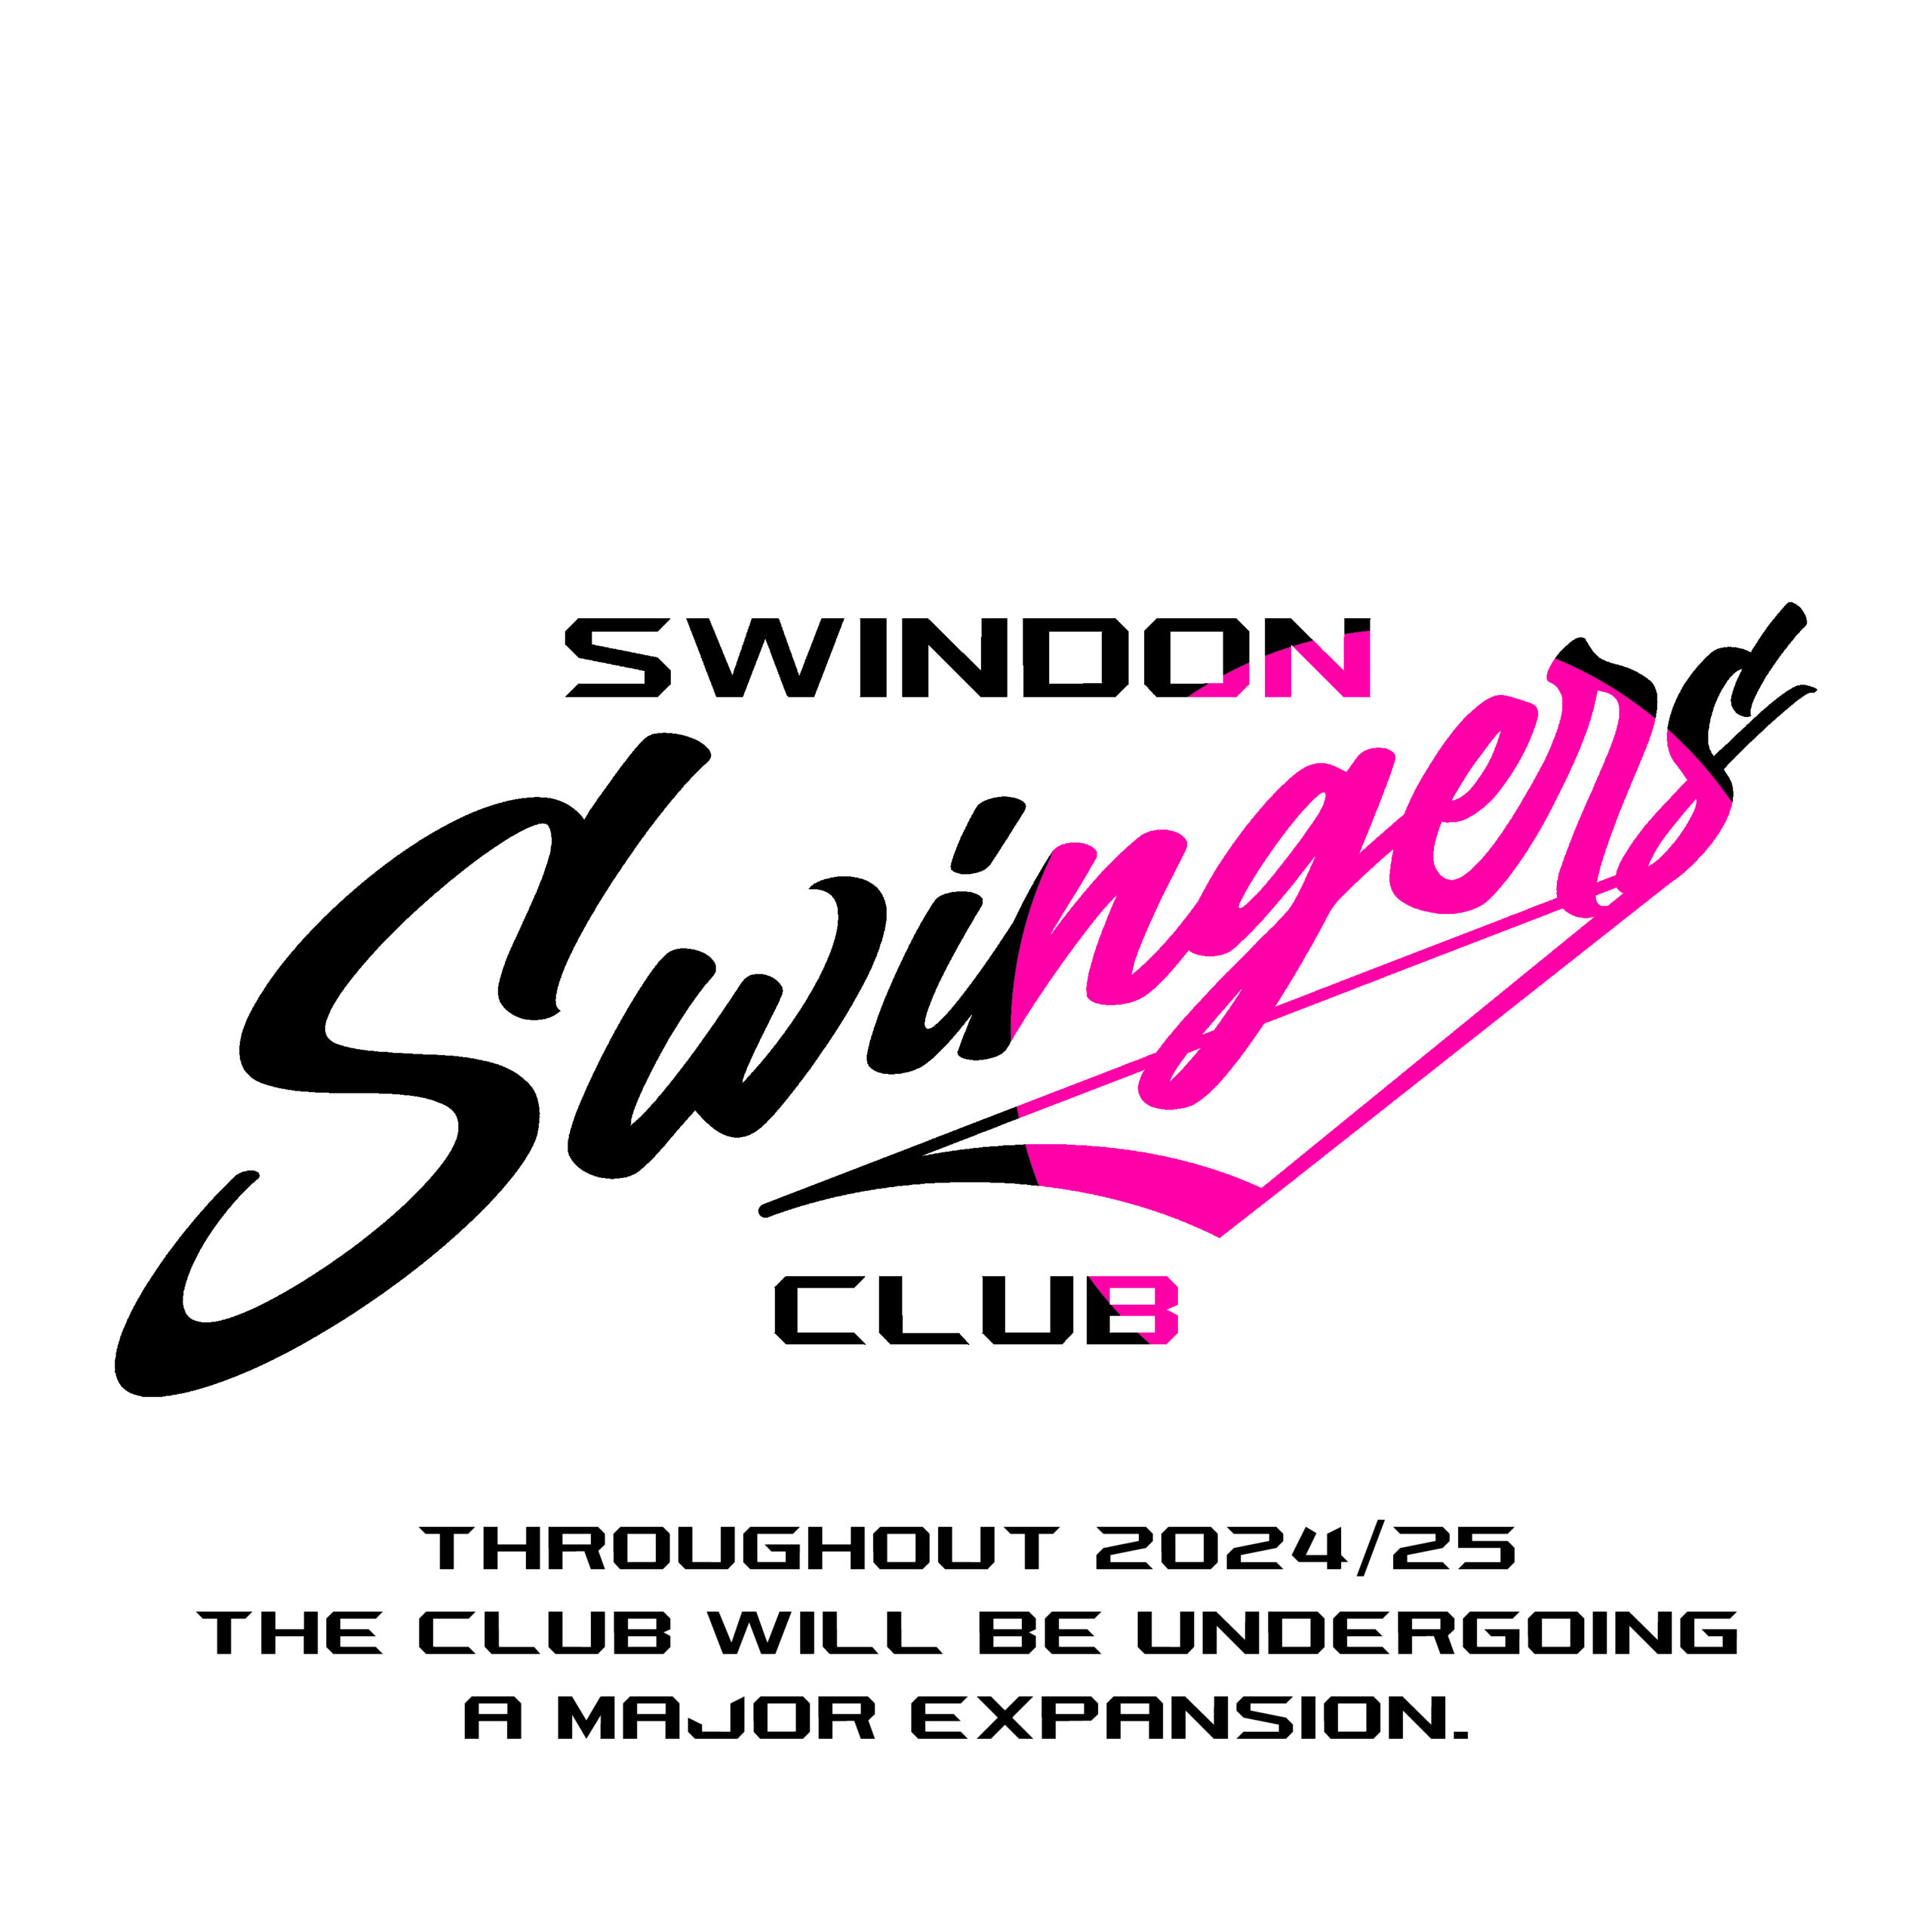 swindon swingers club expansion